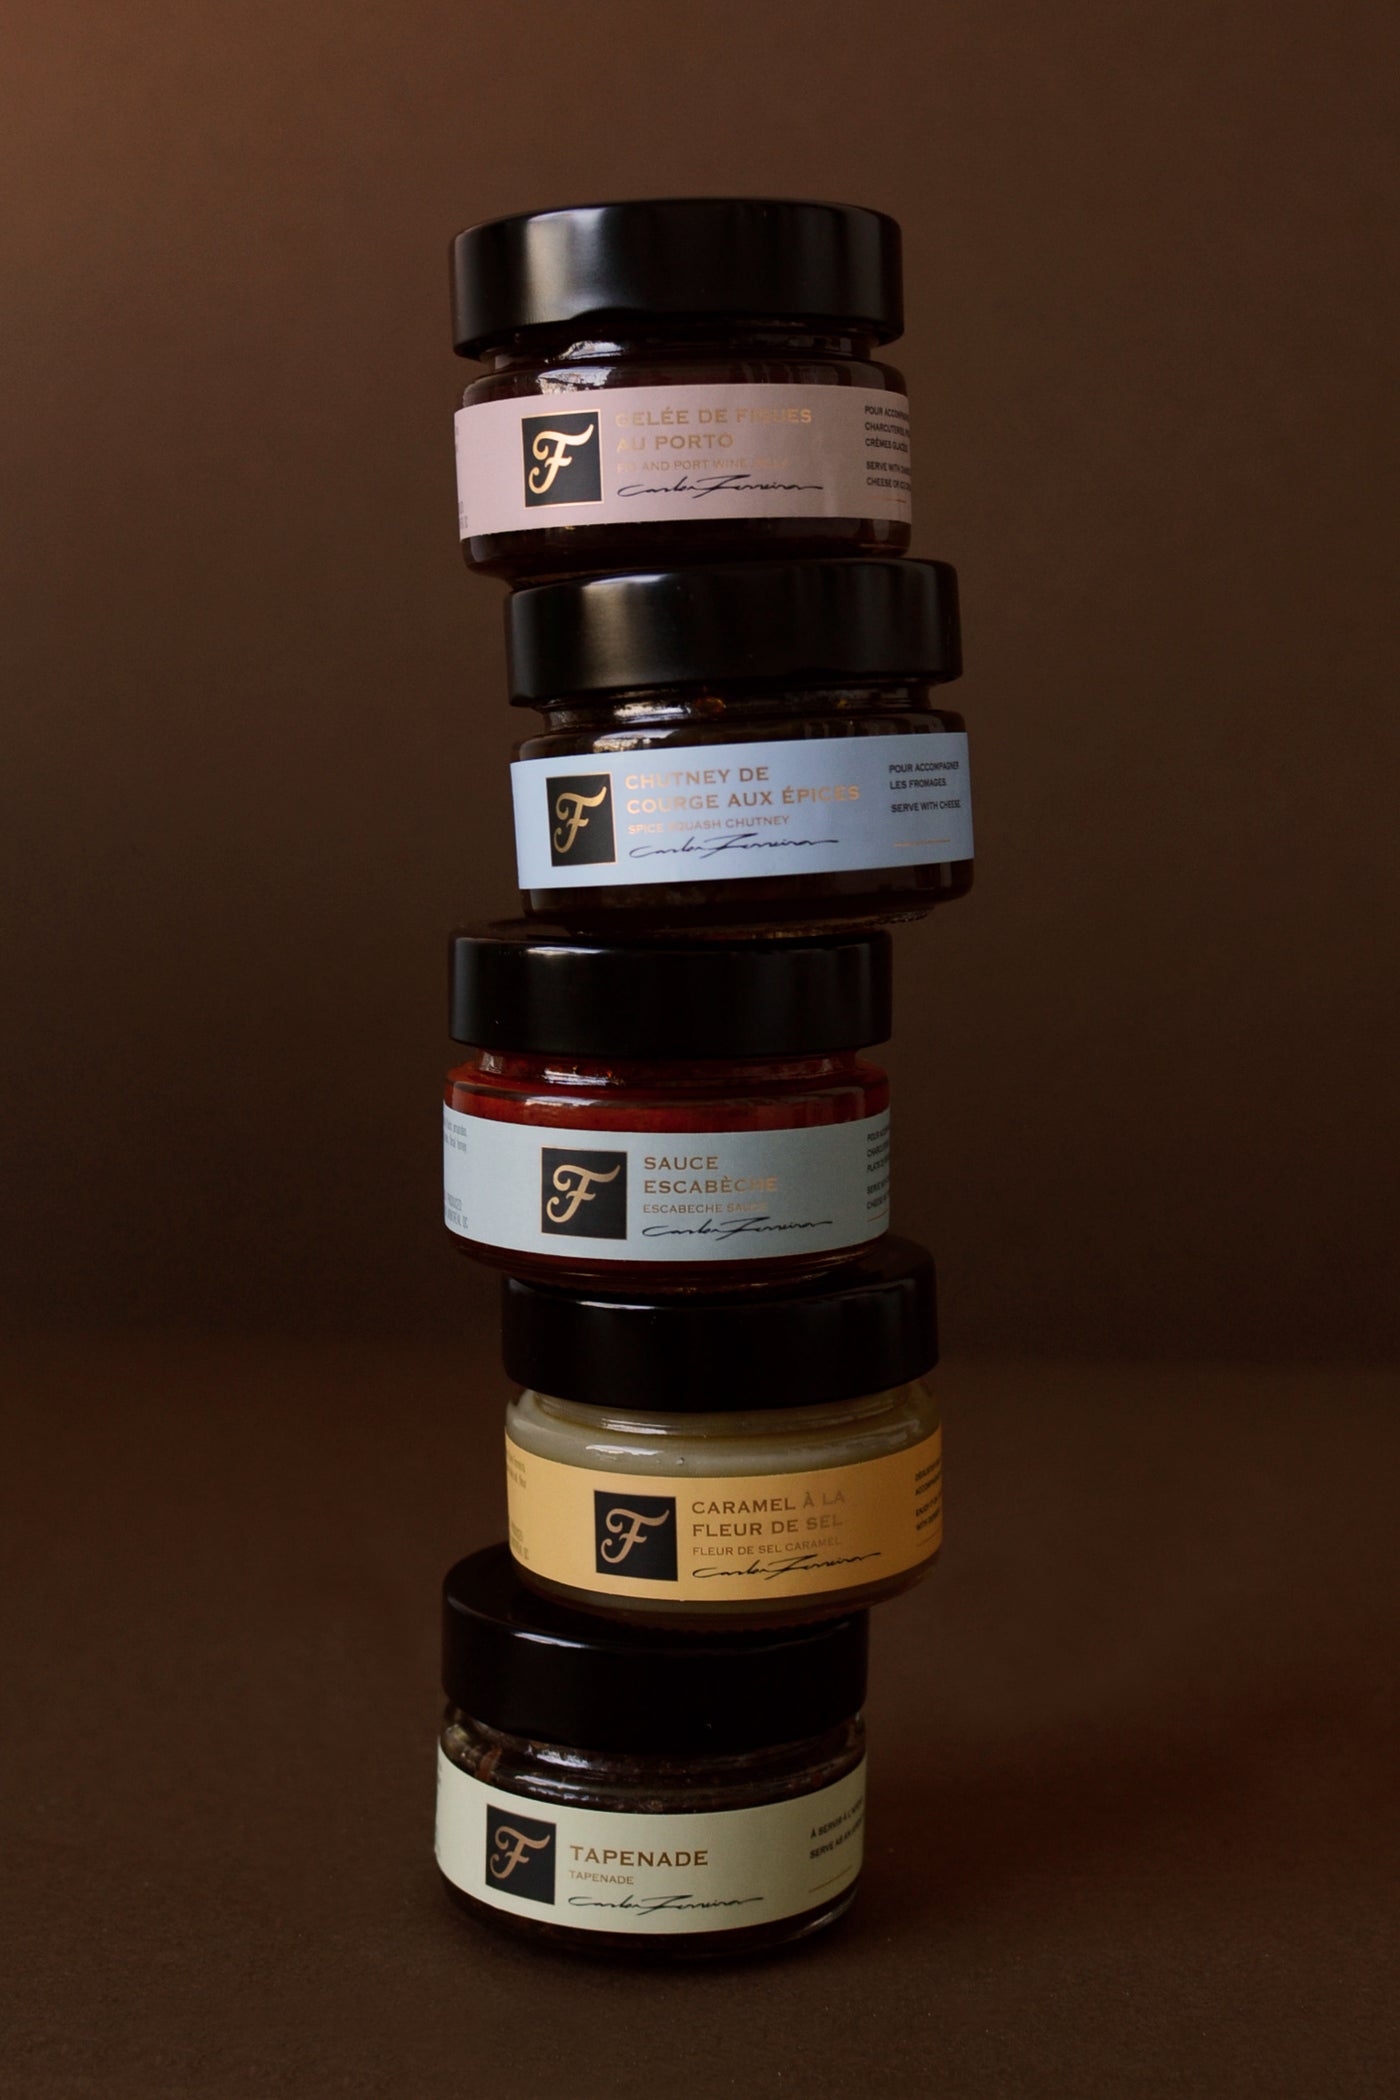 The Ferreira jar collection